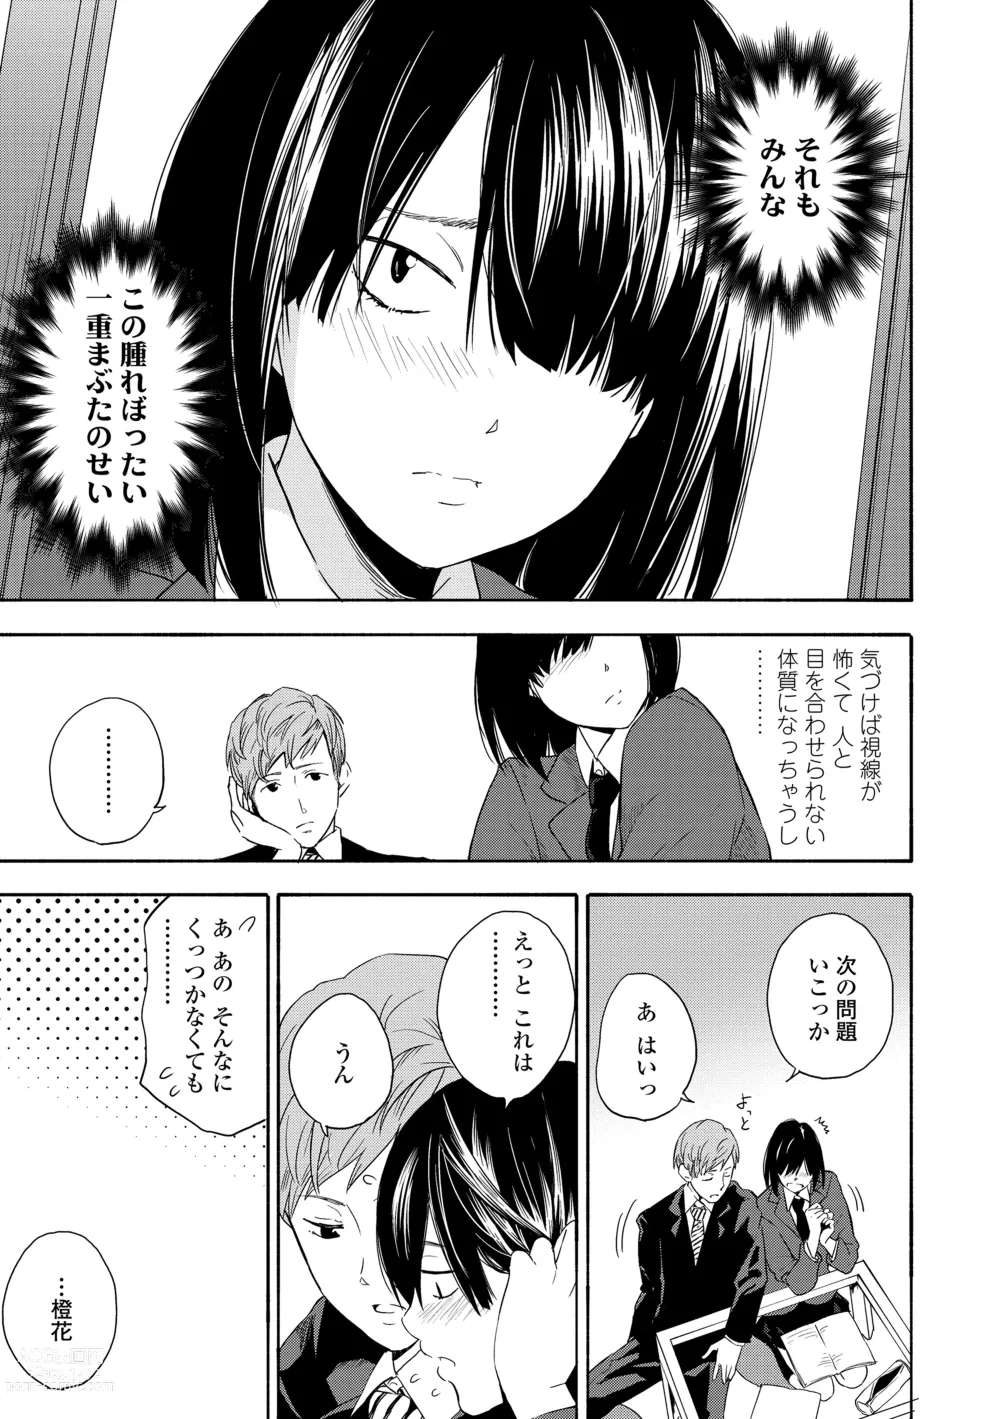 Page 7 of manga Shishunki no Eros - puberty eros + DLsite Kounyu Tokuten